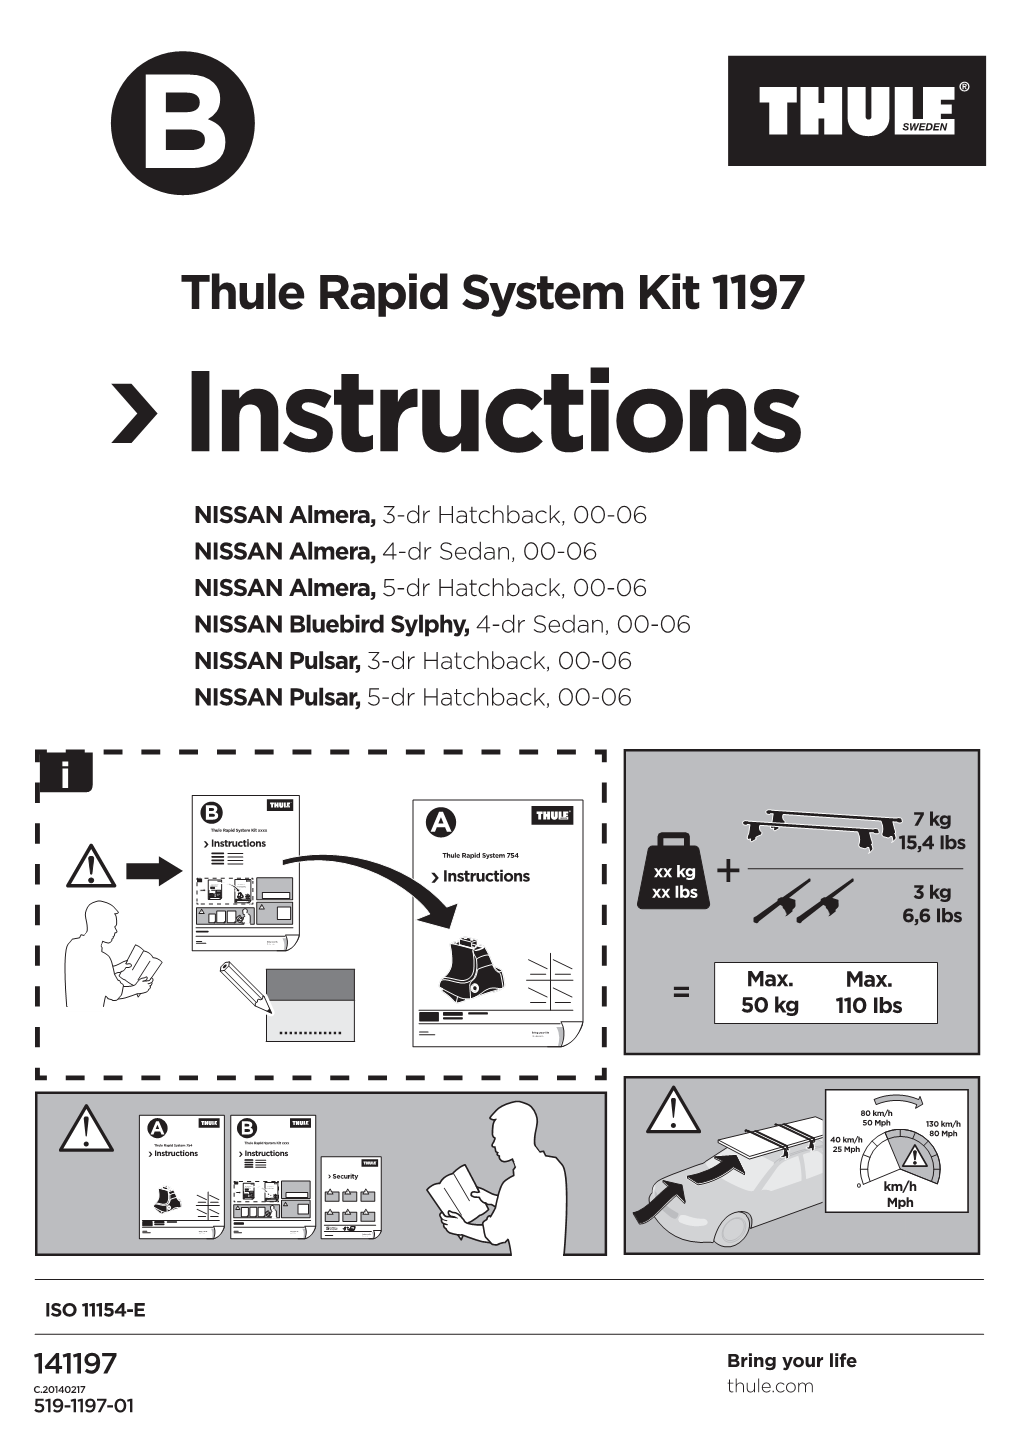 B Thule Rapid System Kit 1197